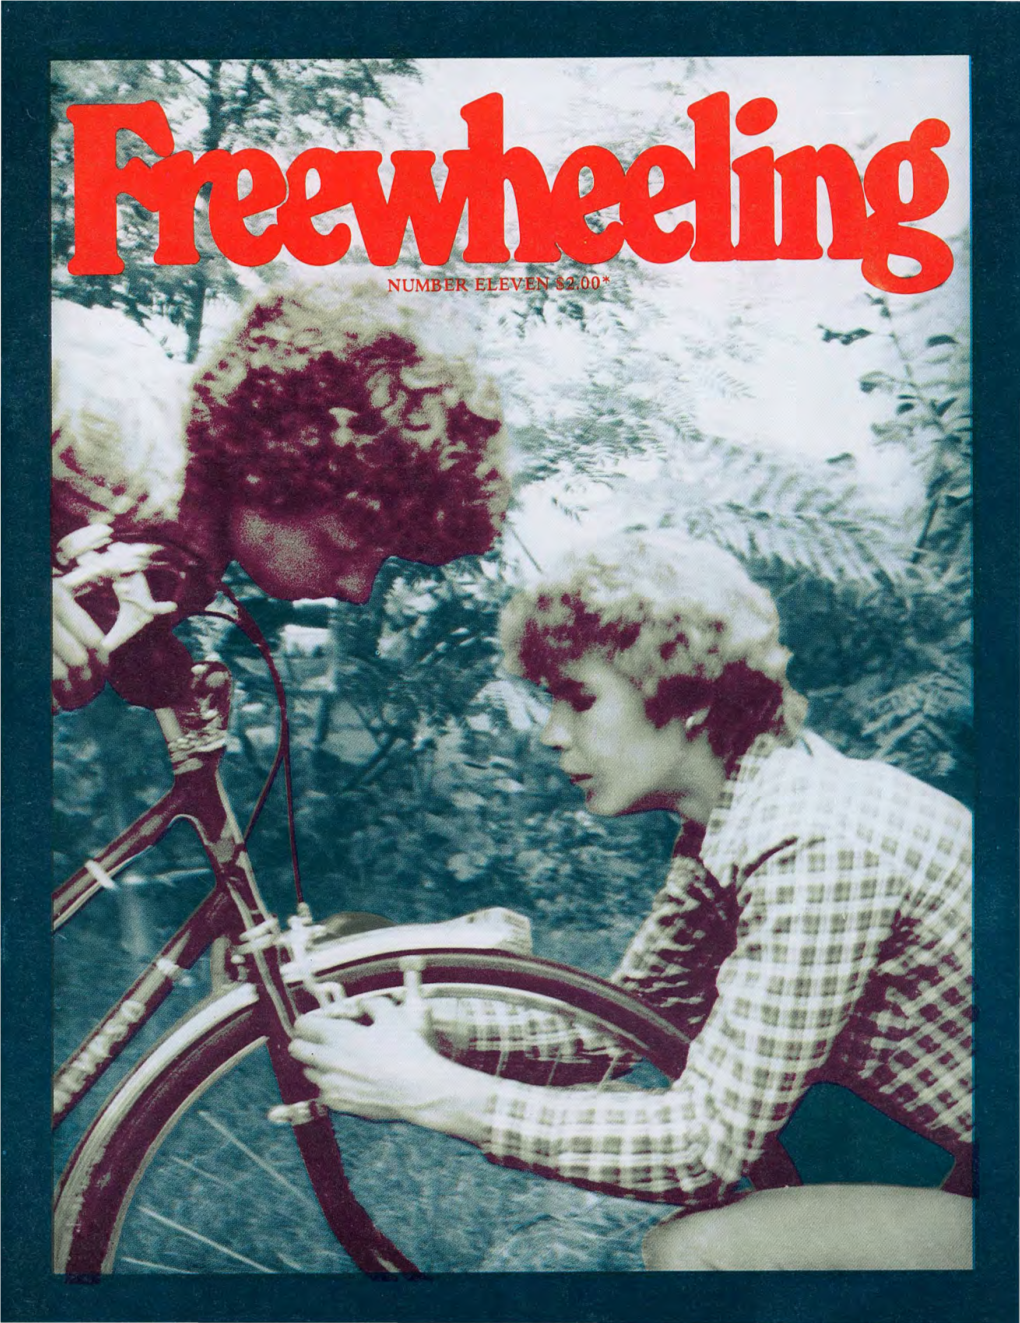 Freewheeling11-SCREE